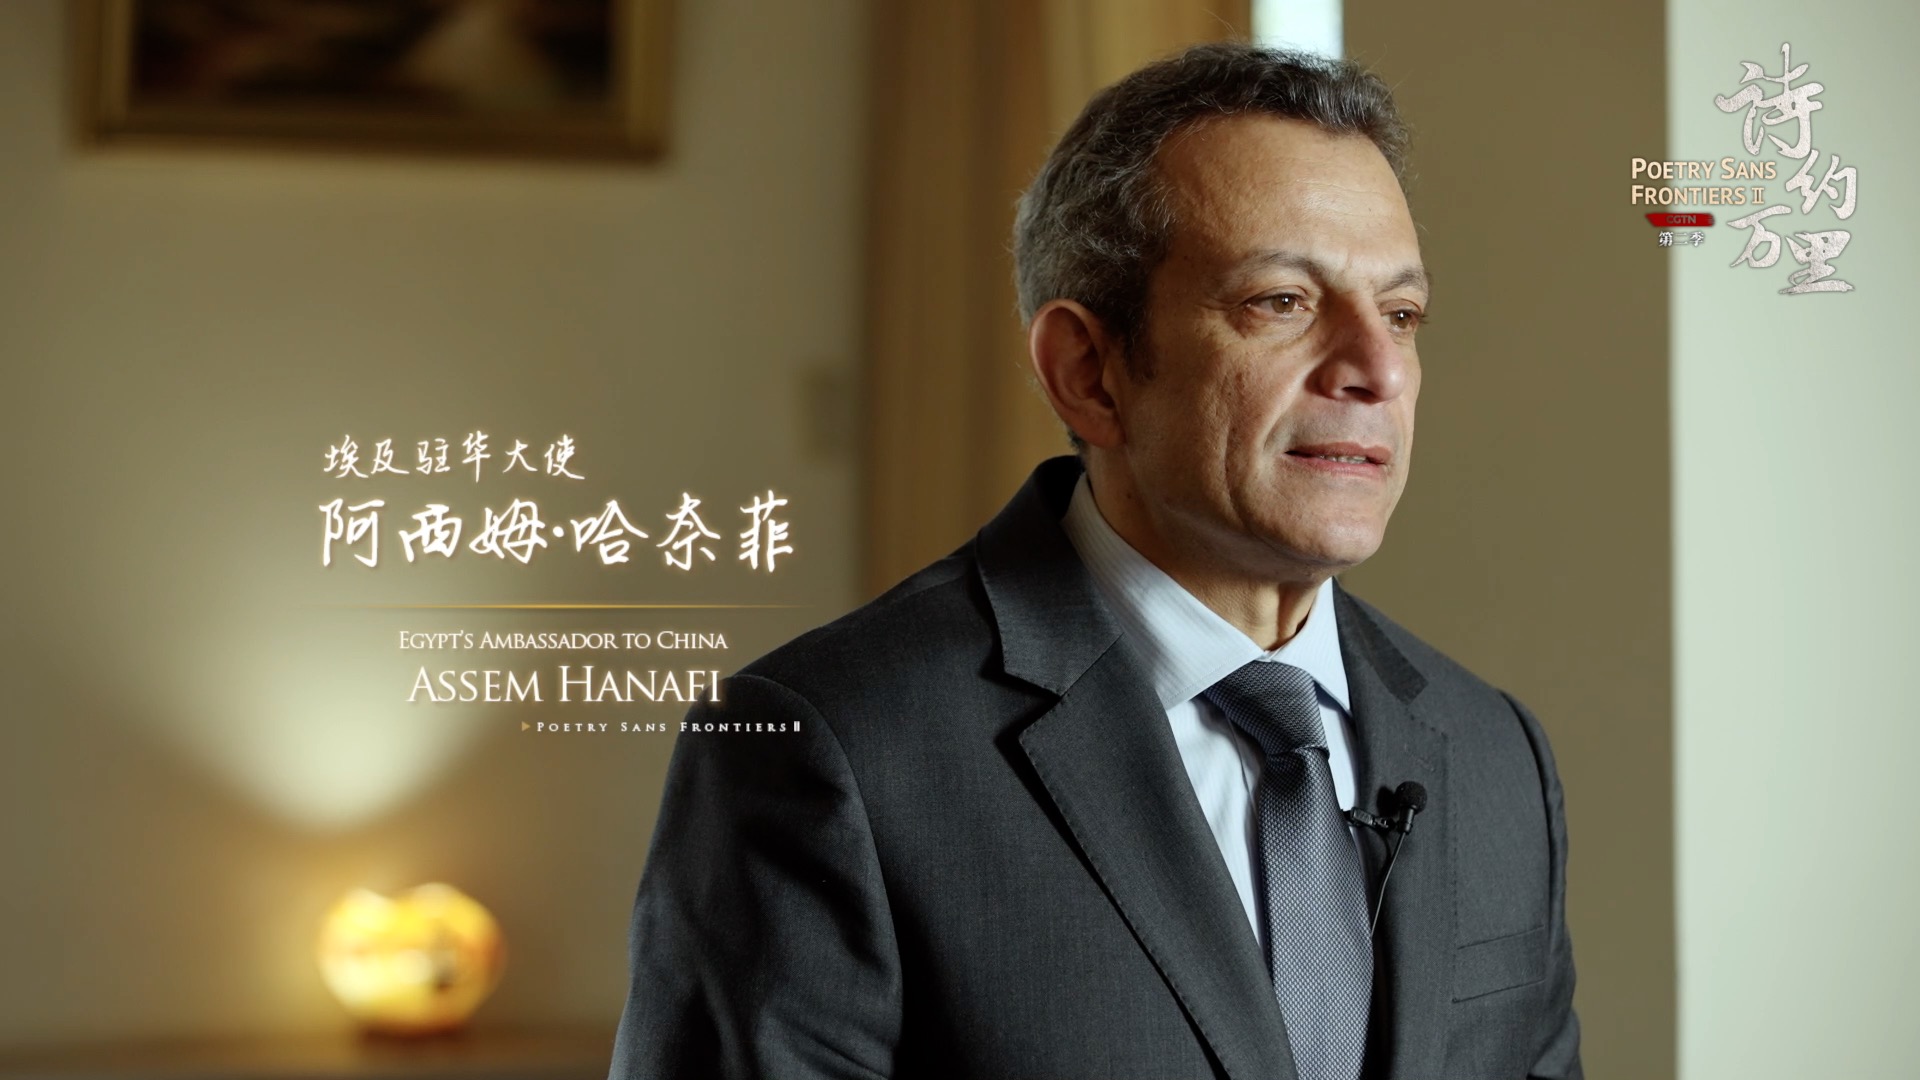 Egypt's ambassador to China shares poem on love for motherland